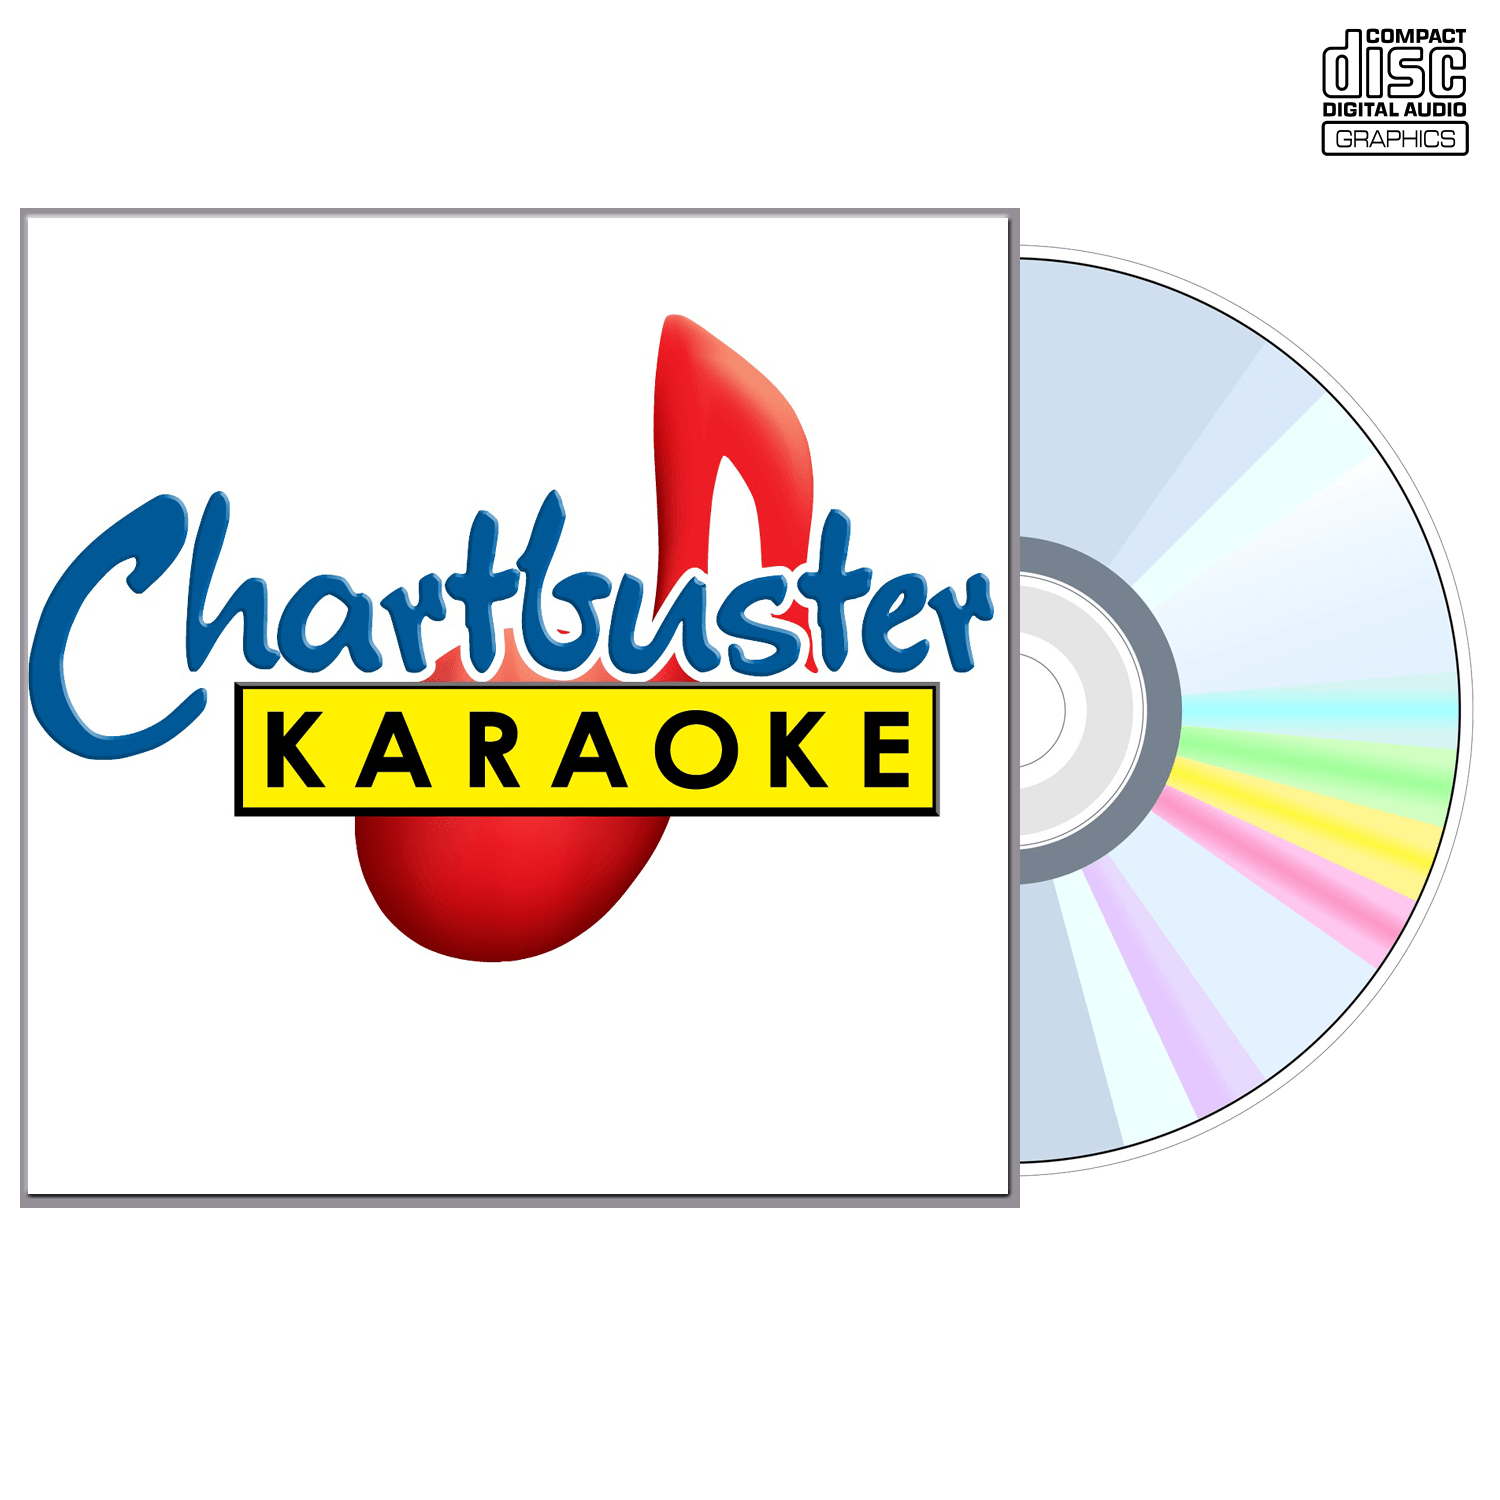 Alison Krauss Vol 2 - CD+G - Chartbuster Karaoke - Karaoke Home Entertainment